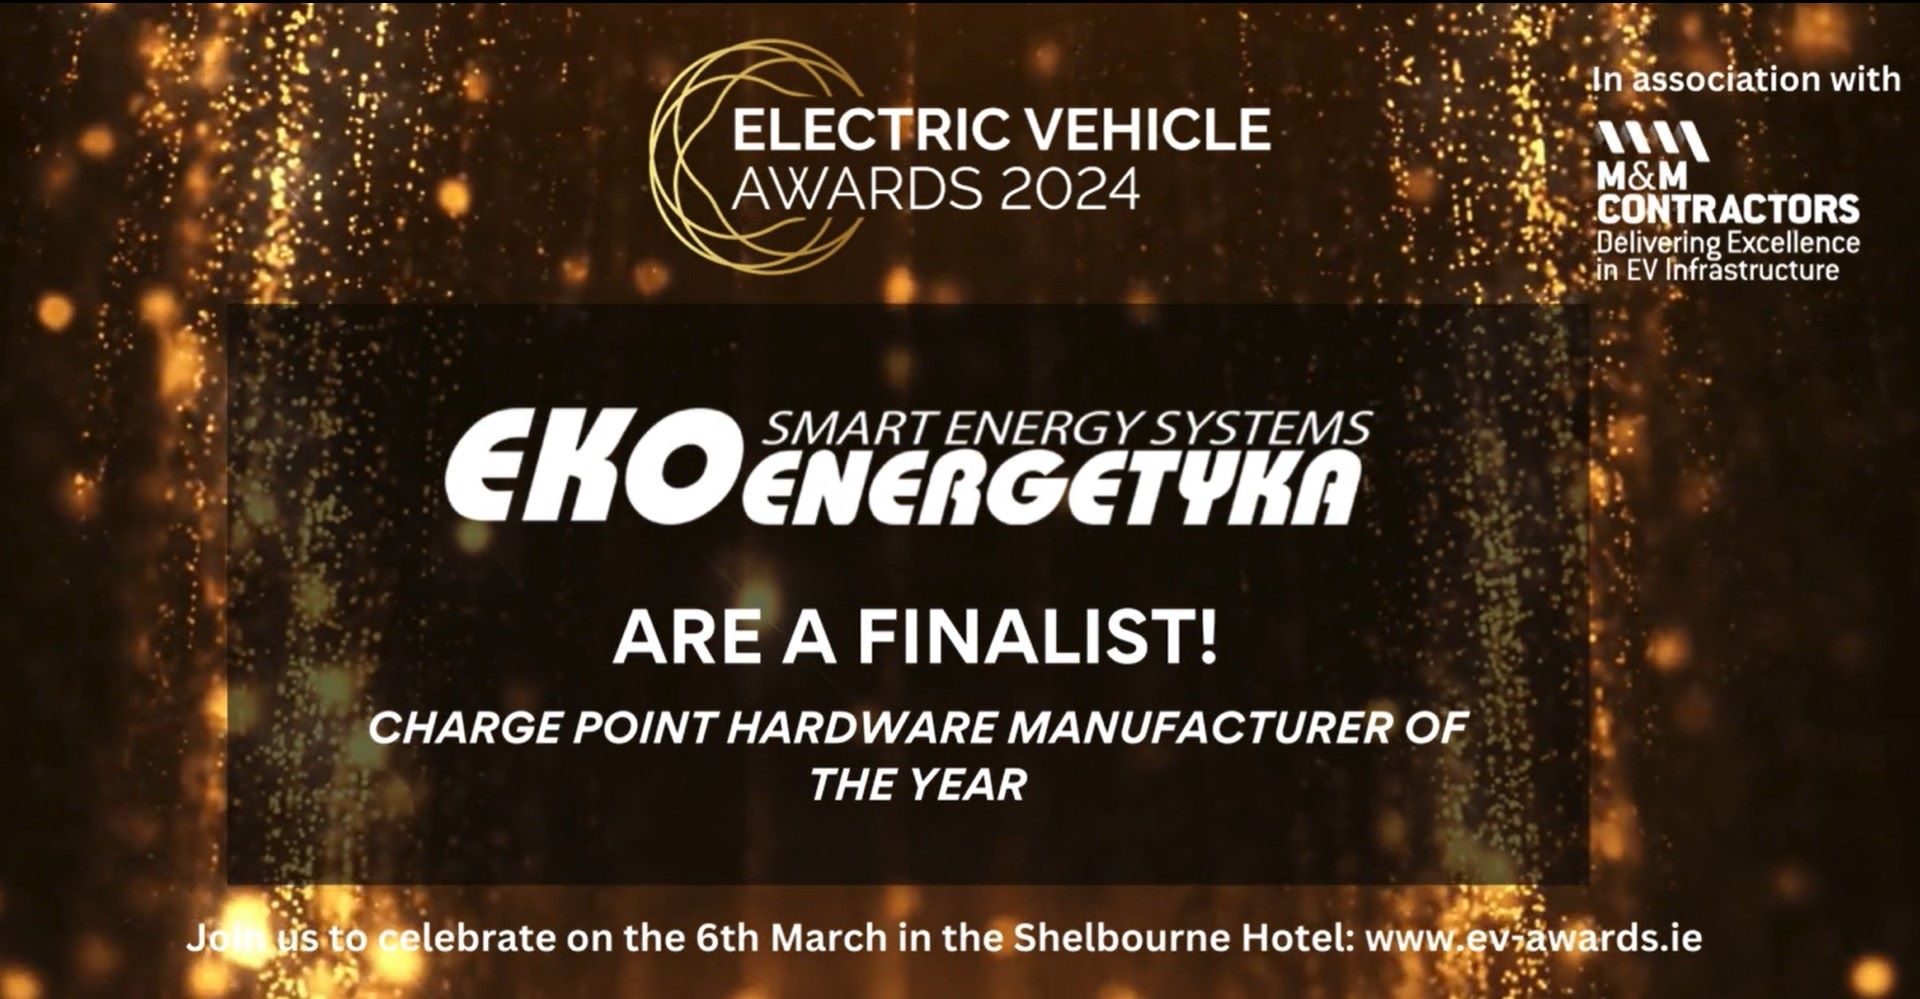 Ekoenergetyka with 2 nominations at EV Awards 2024 in Ireland